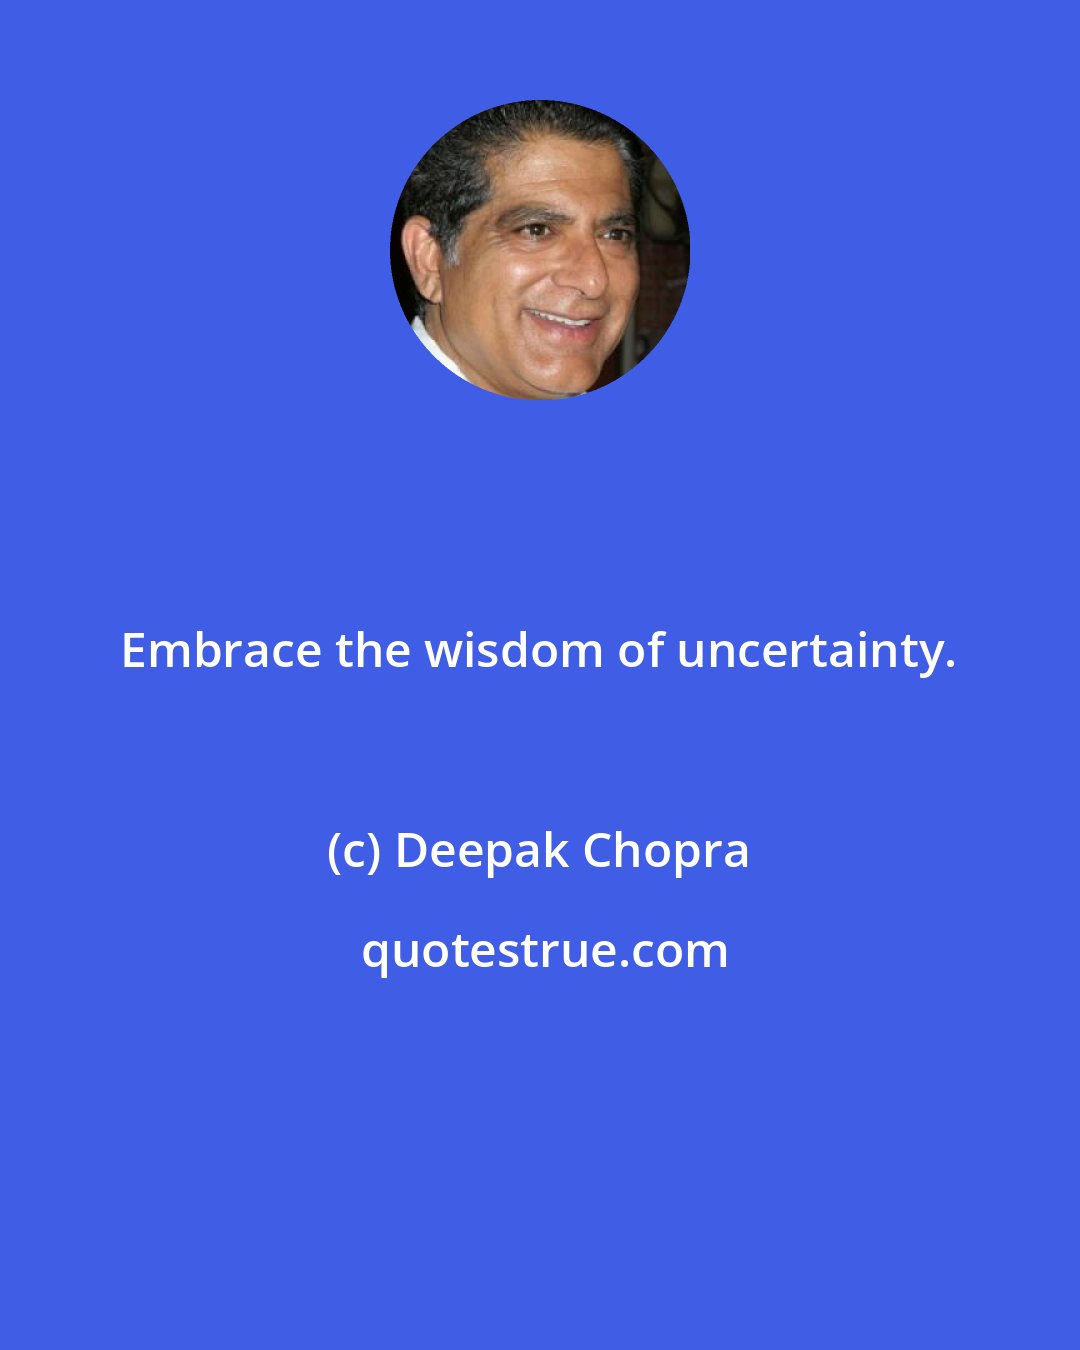 Deepak Chopra: Embrace the wisdom of uncertainty.